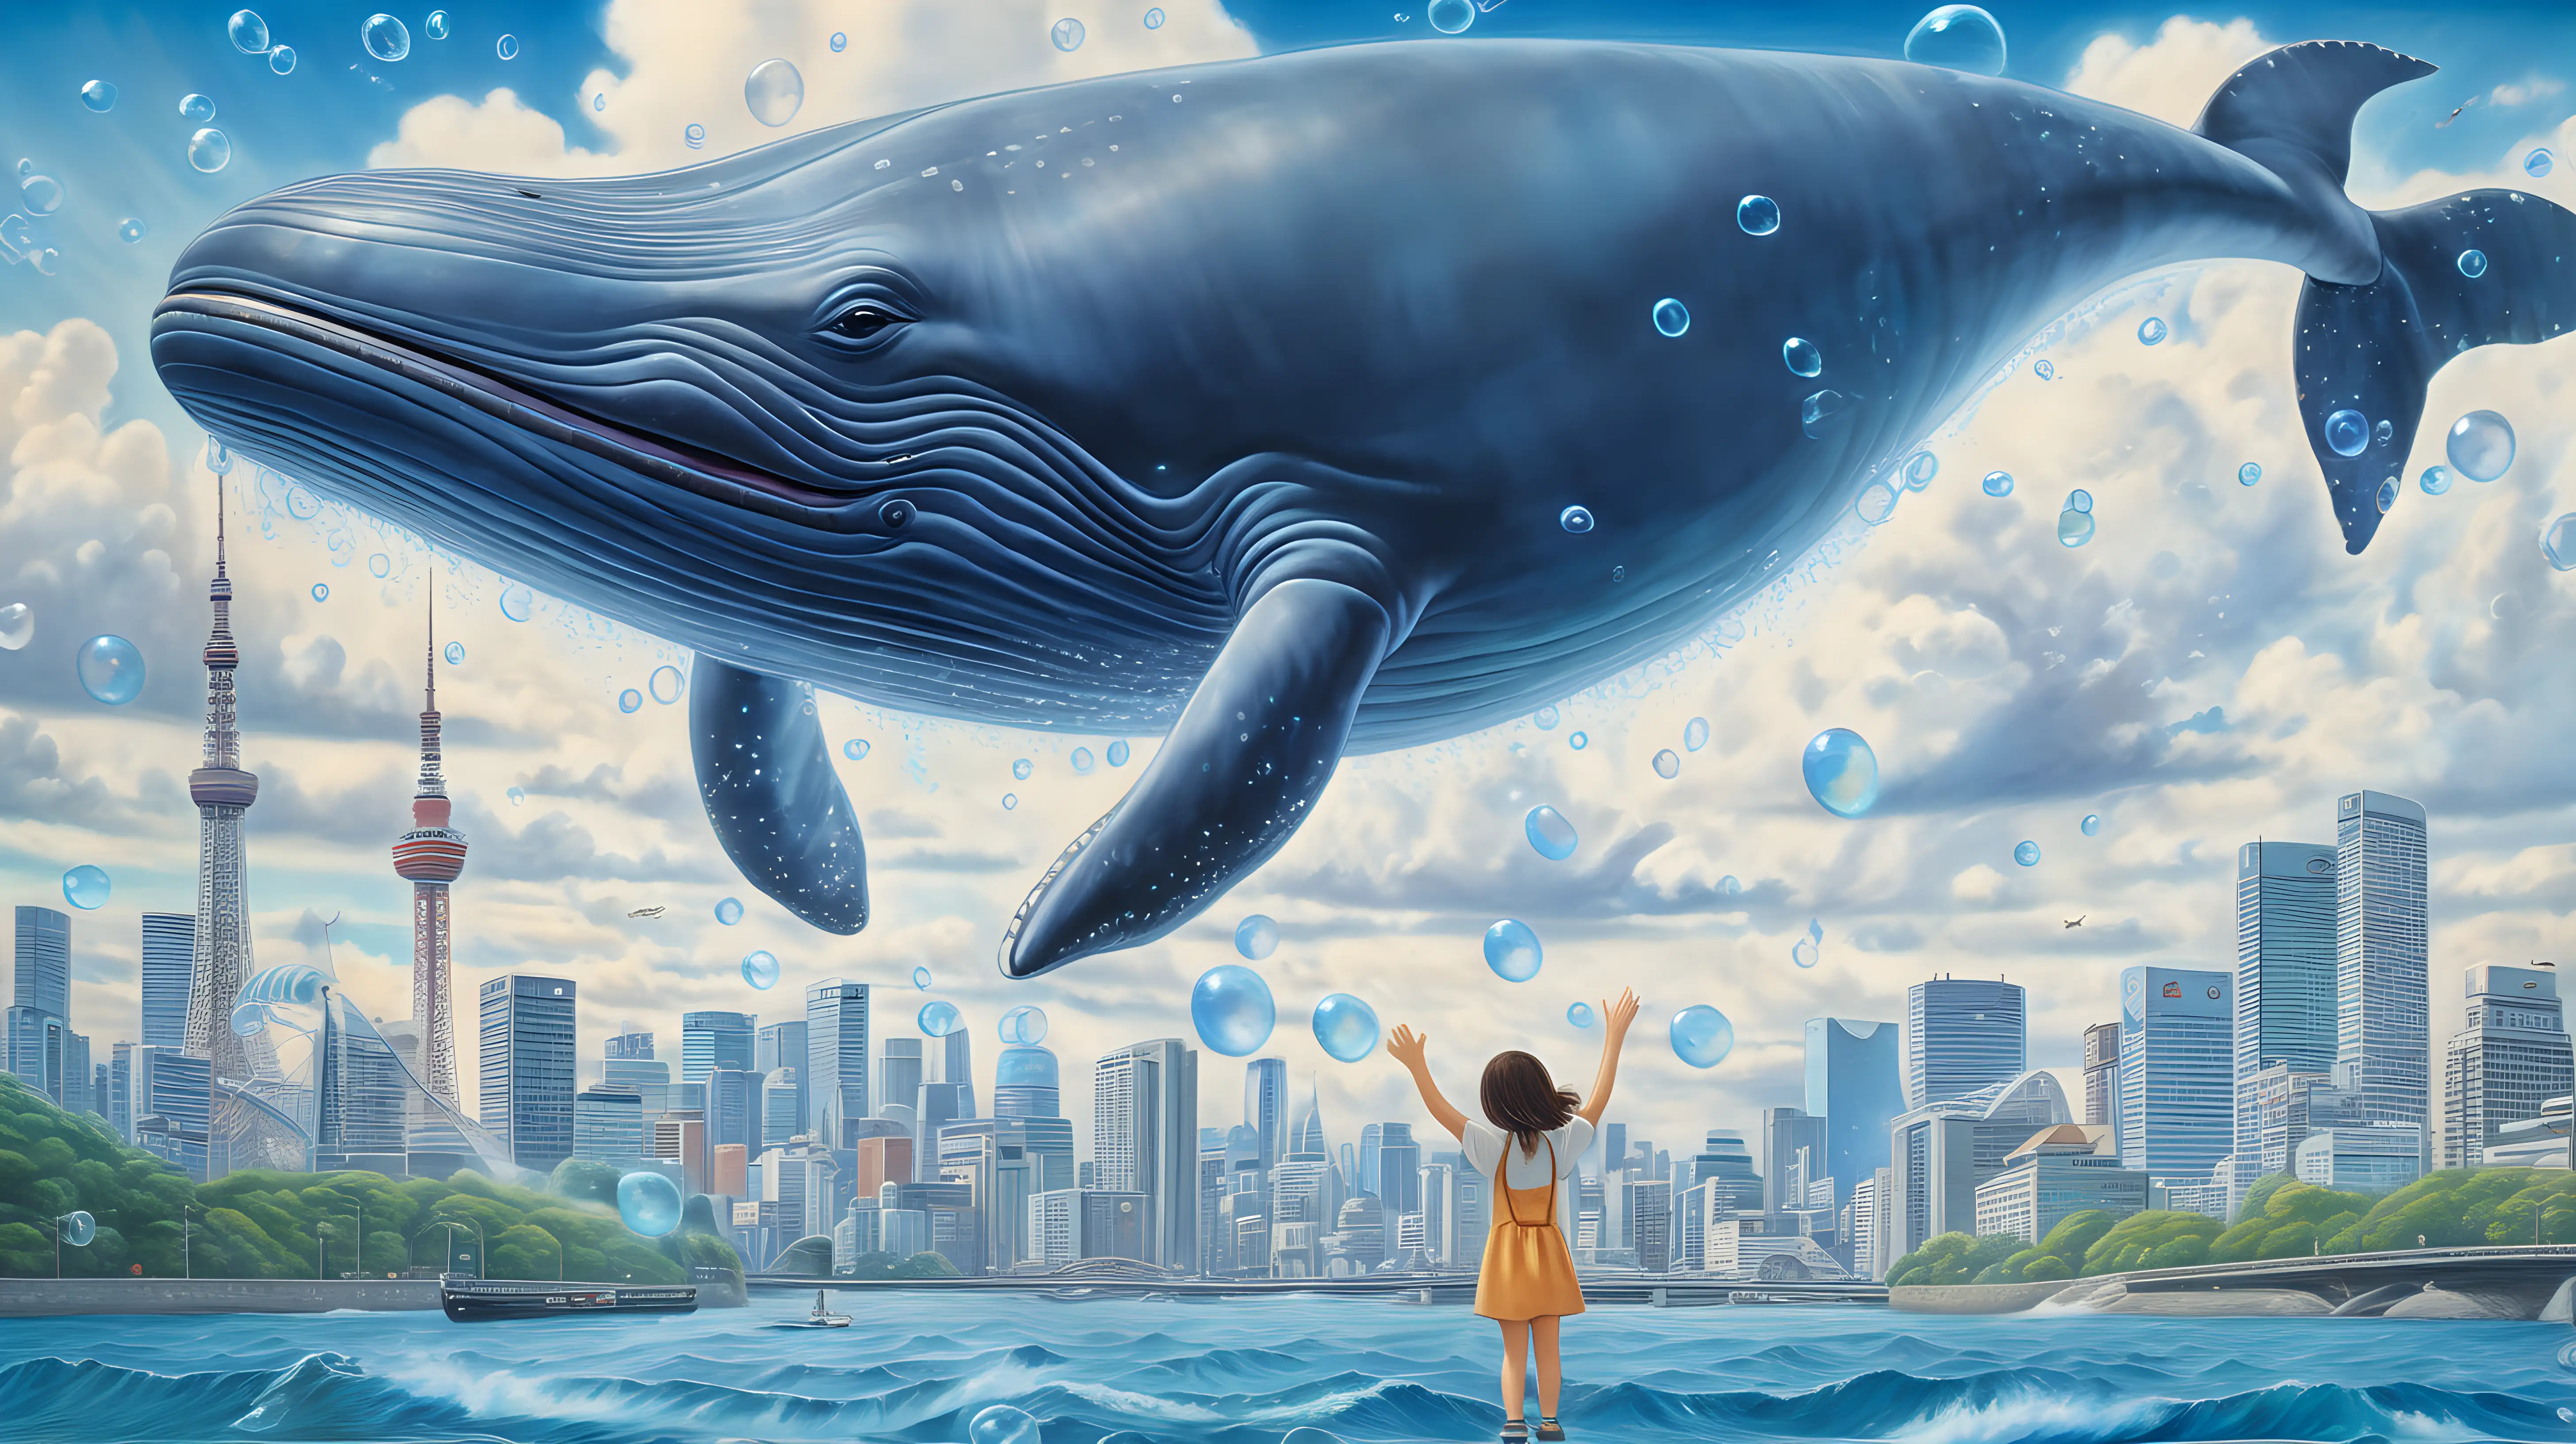 Whimsical GhibliInspired Art Enchanting Girl and Blue Whale in Tokyo Skyline